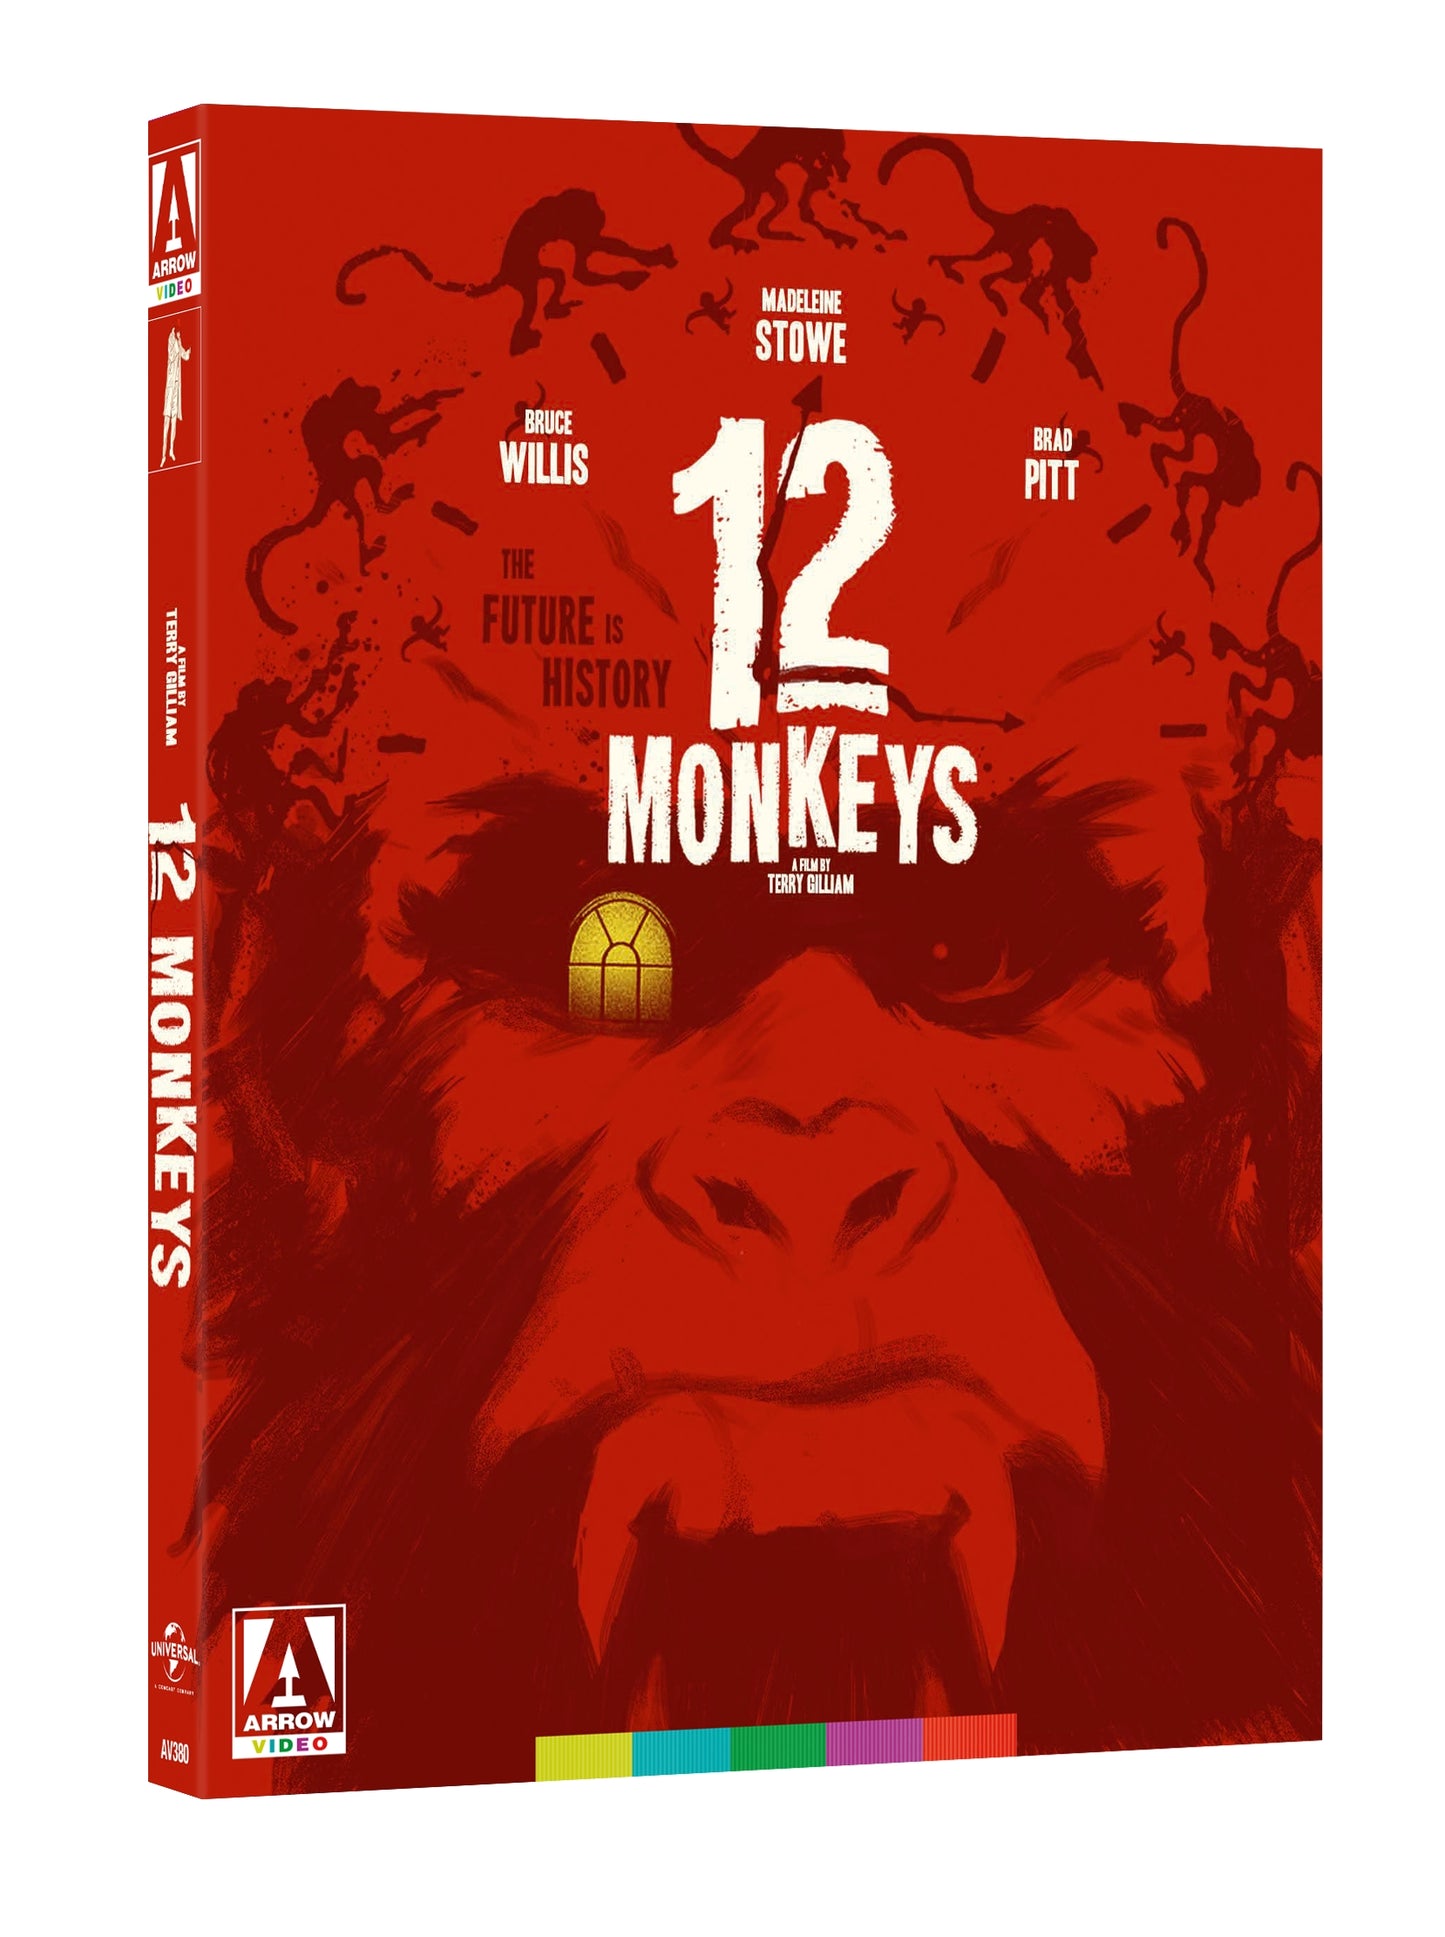 12 Monkeys 4K UHD Limited Edition with Slipcover (Arrow U.S.)